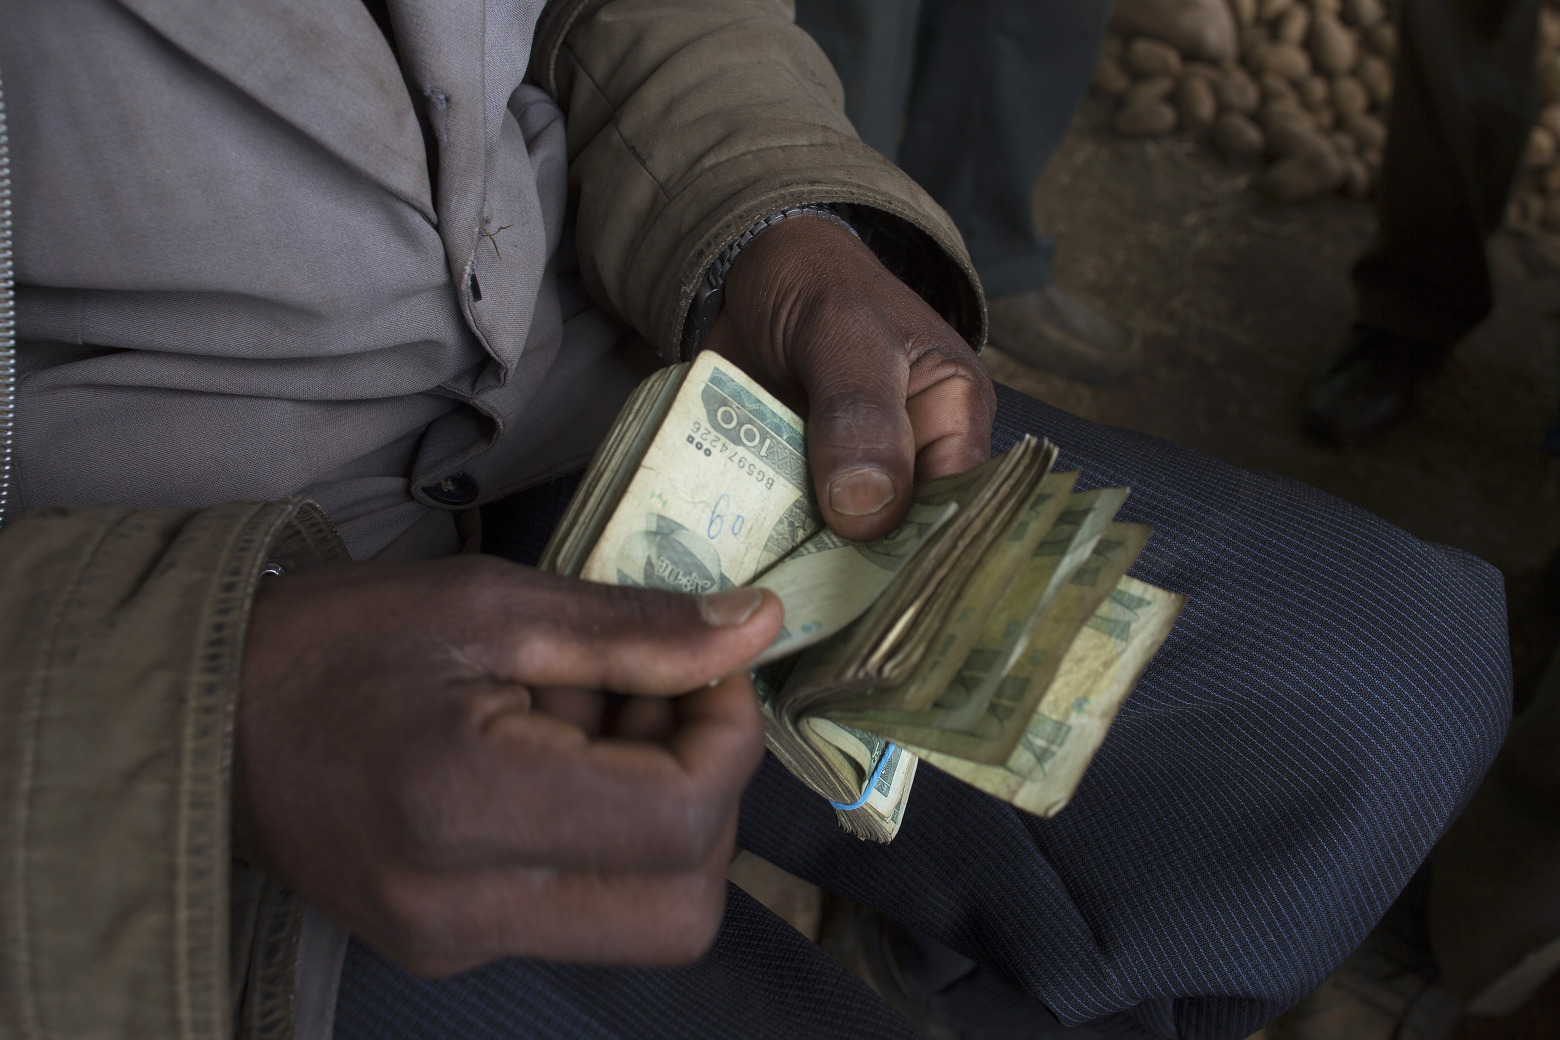 ETB/USD Ethiopia Black Market Currency Trade Thrives as Economy Tanks